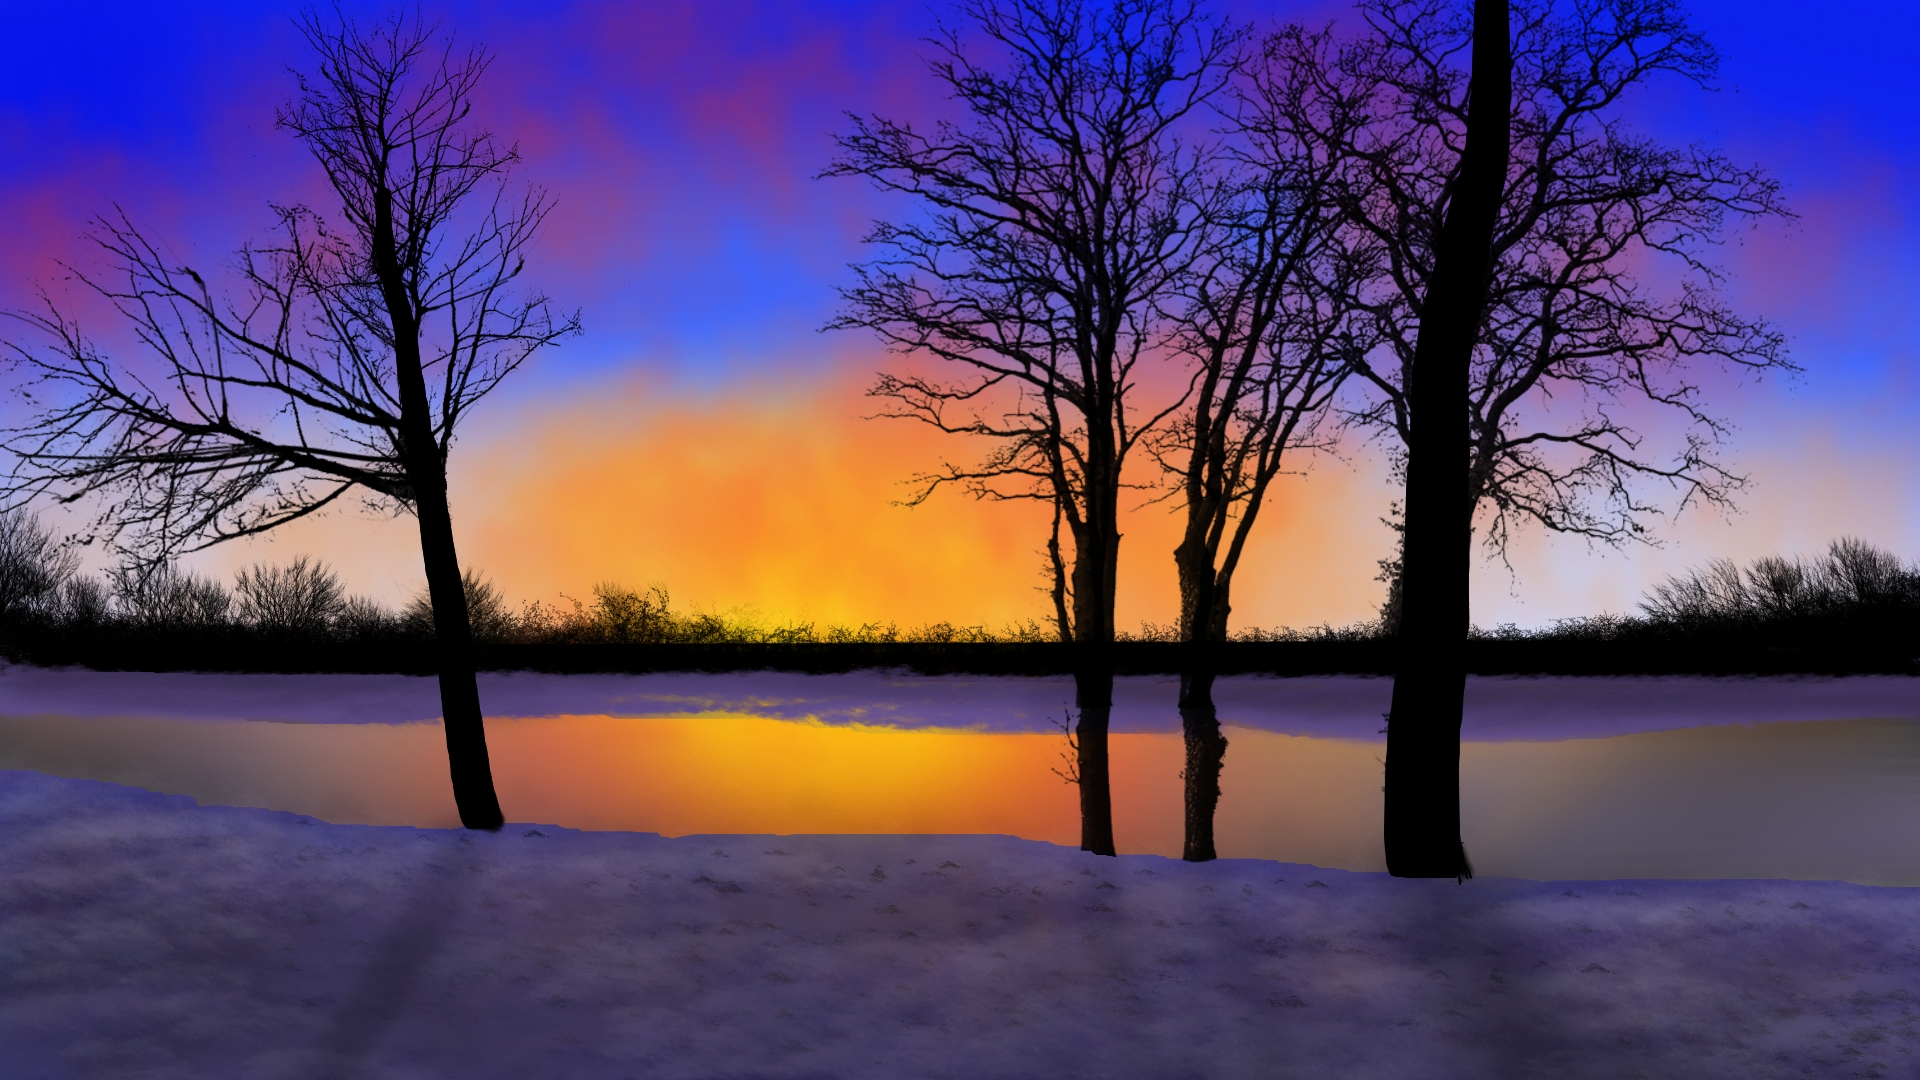 Digital Painting Digital Art Nature Landscape Winter Is Coming Twilight Trees Sunset Glow 1920x1080